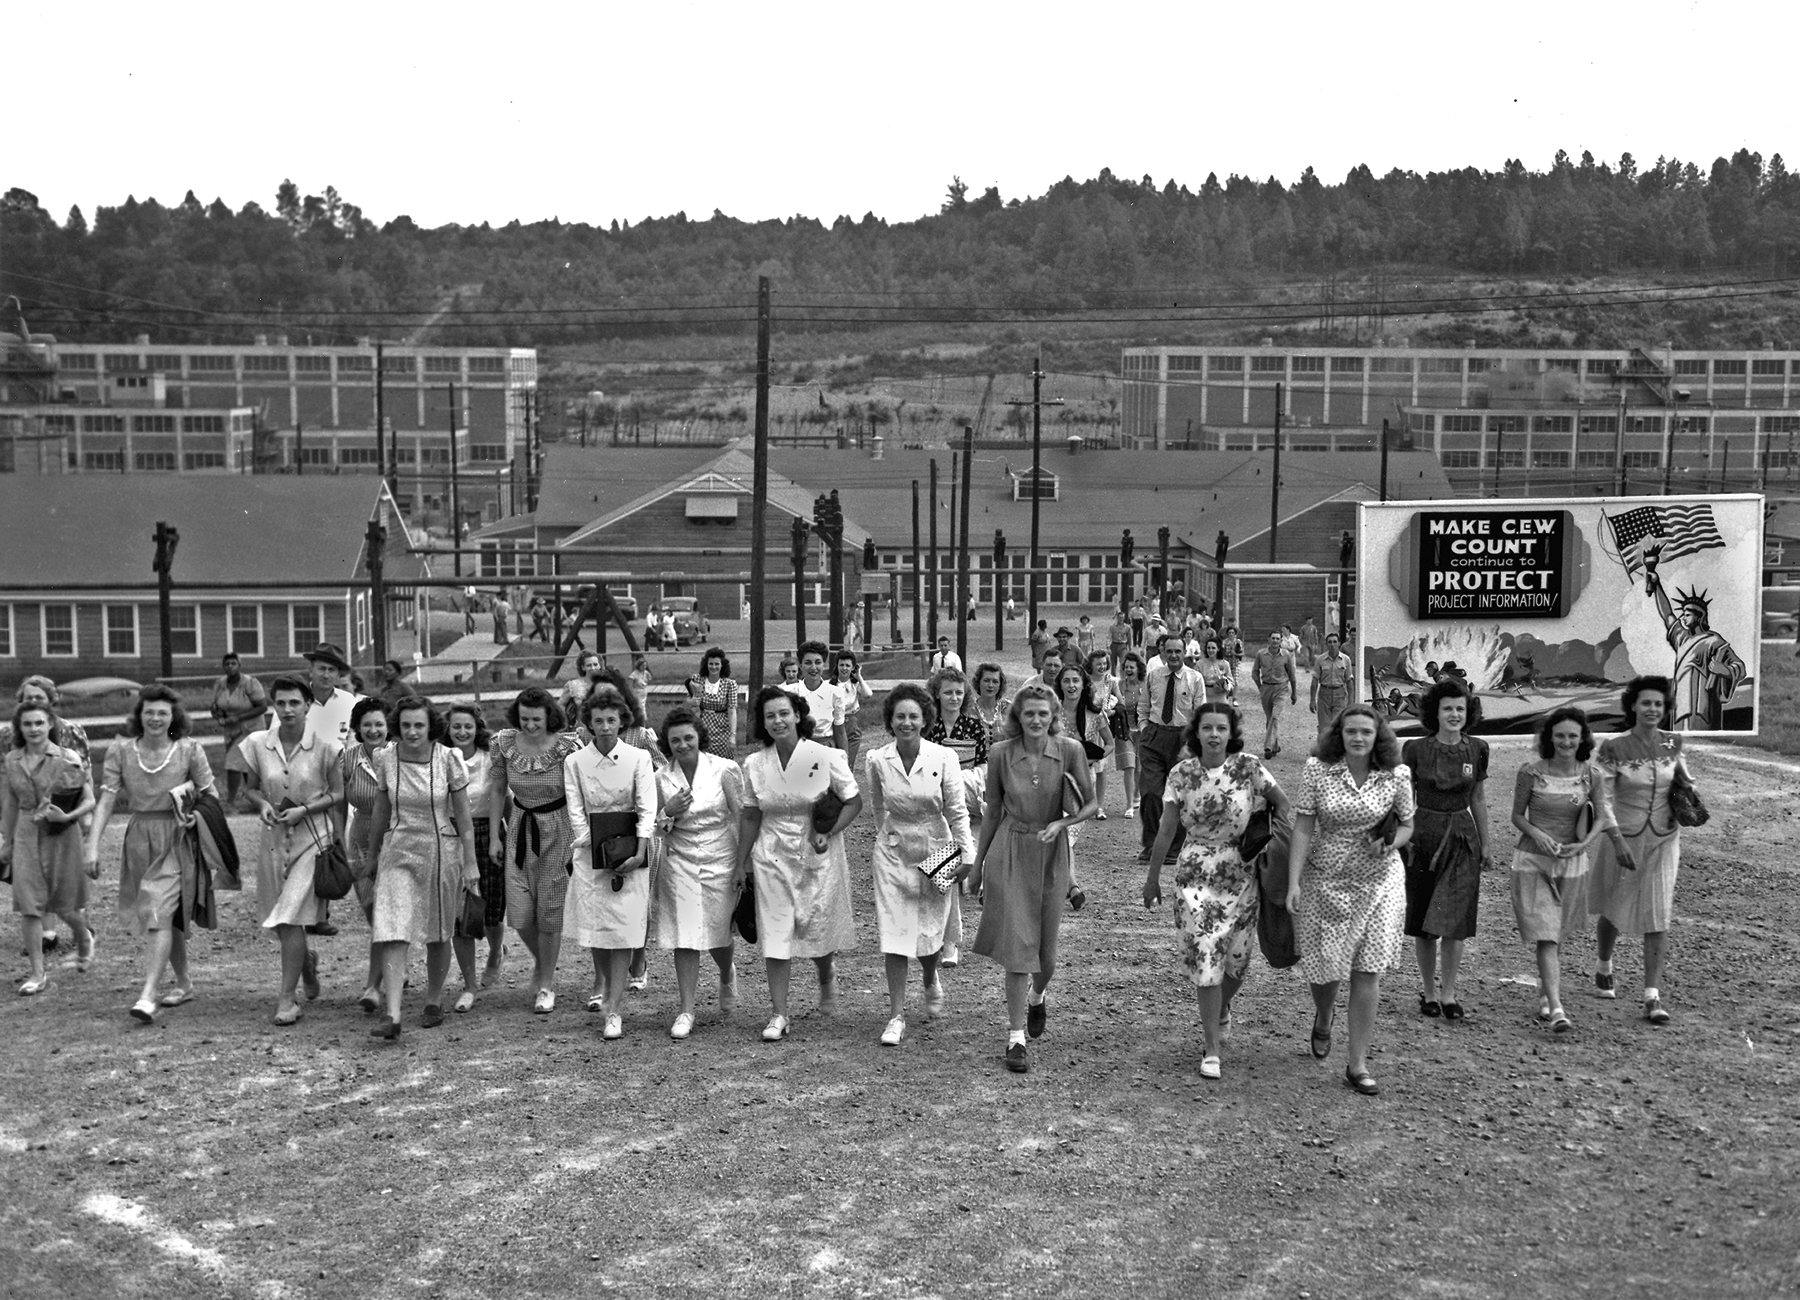 Scene of shift change at the Y-12 uranium enrichment facility in Oak Ridge, Tennessee, United States, circa 1945